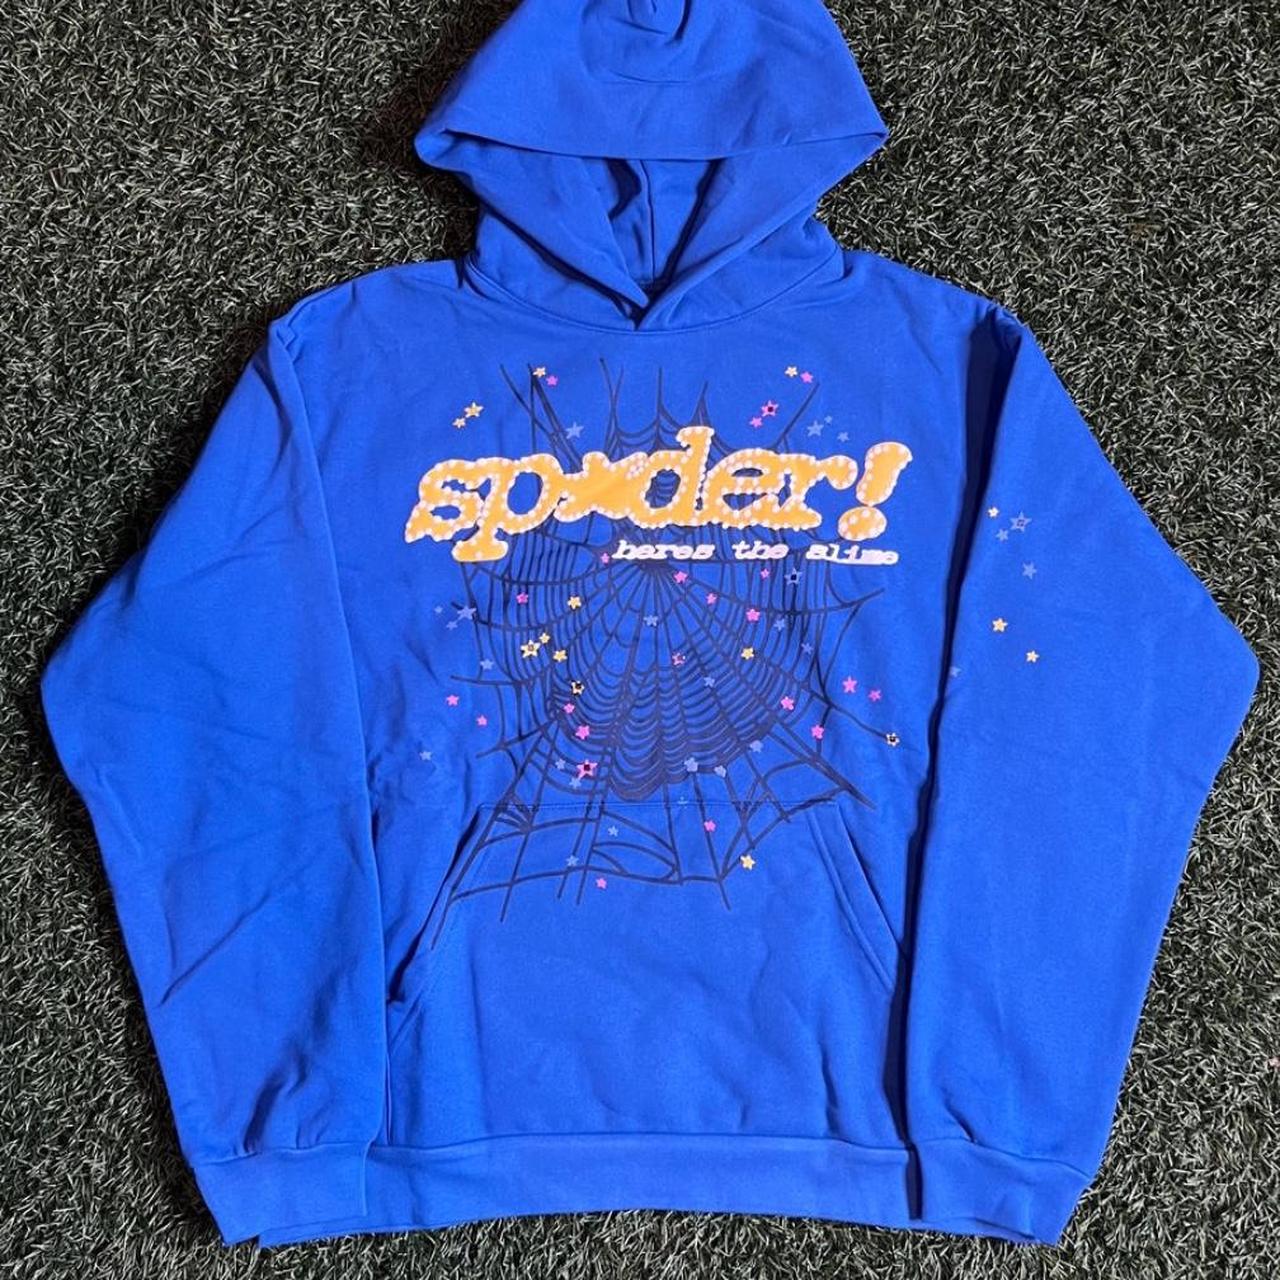 Sp5der Tc hoodie blue - Depop